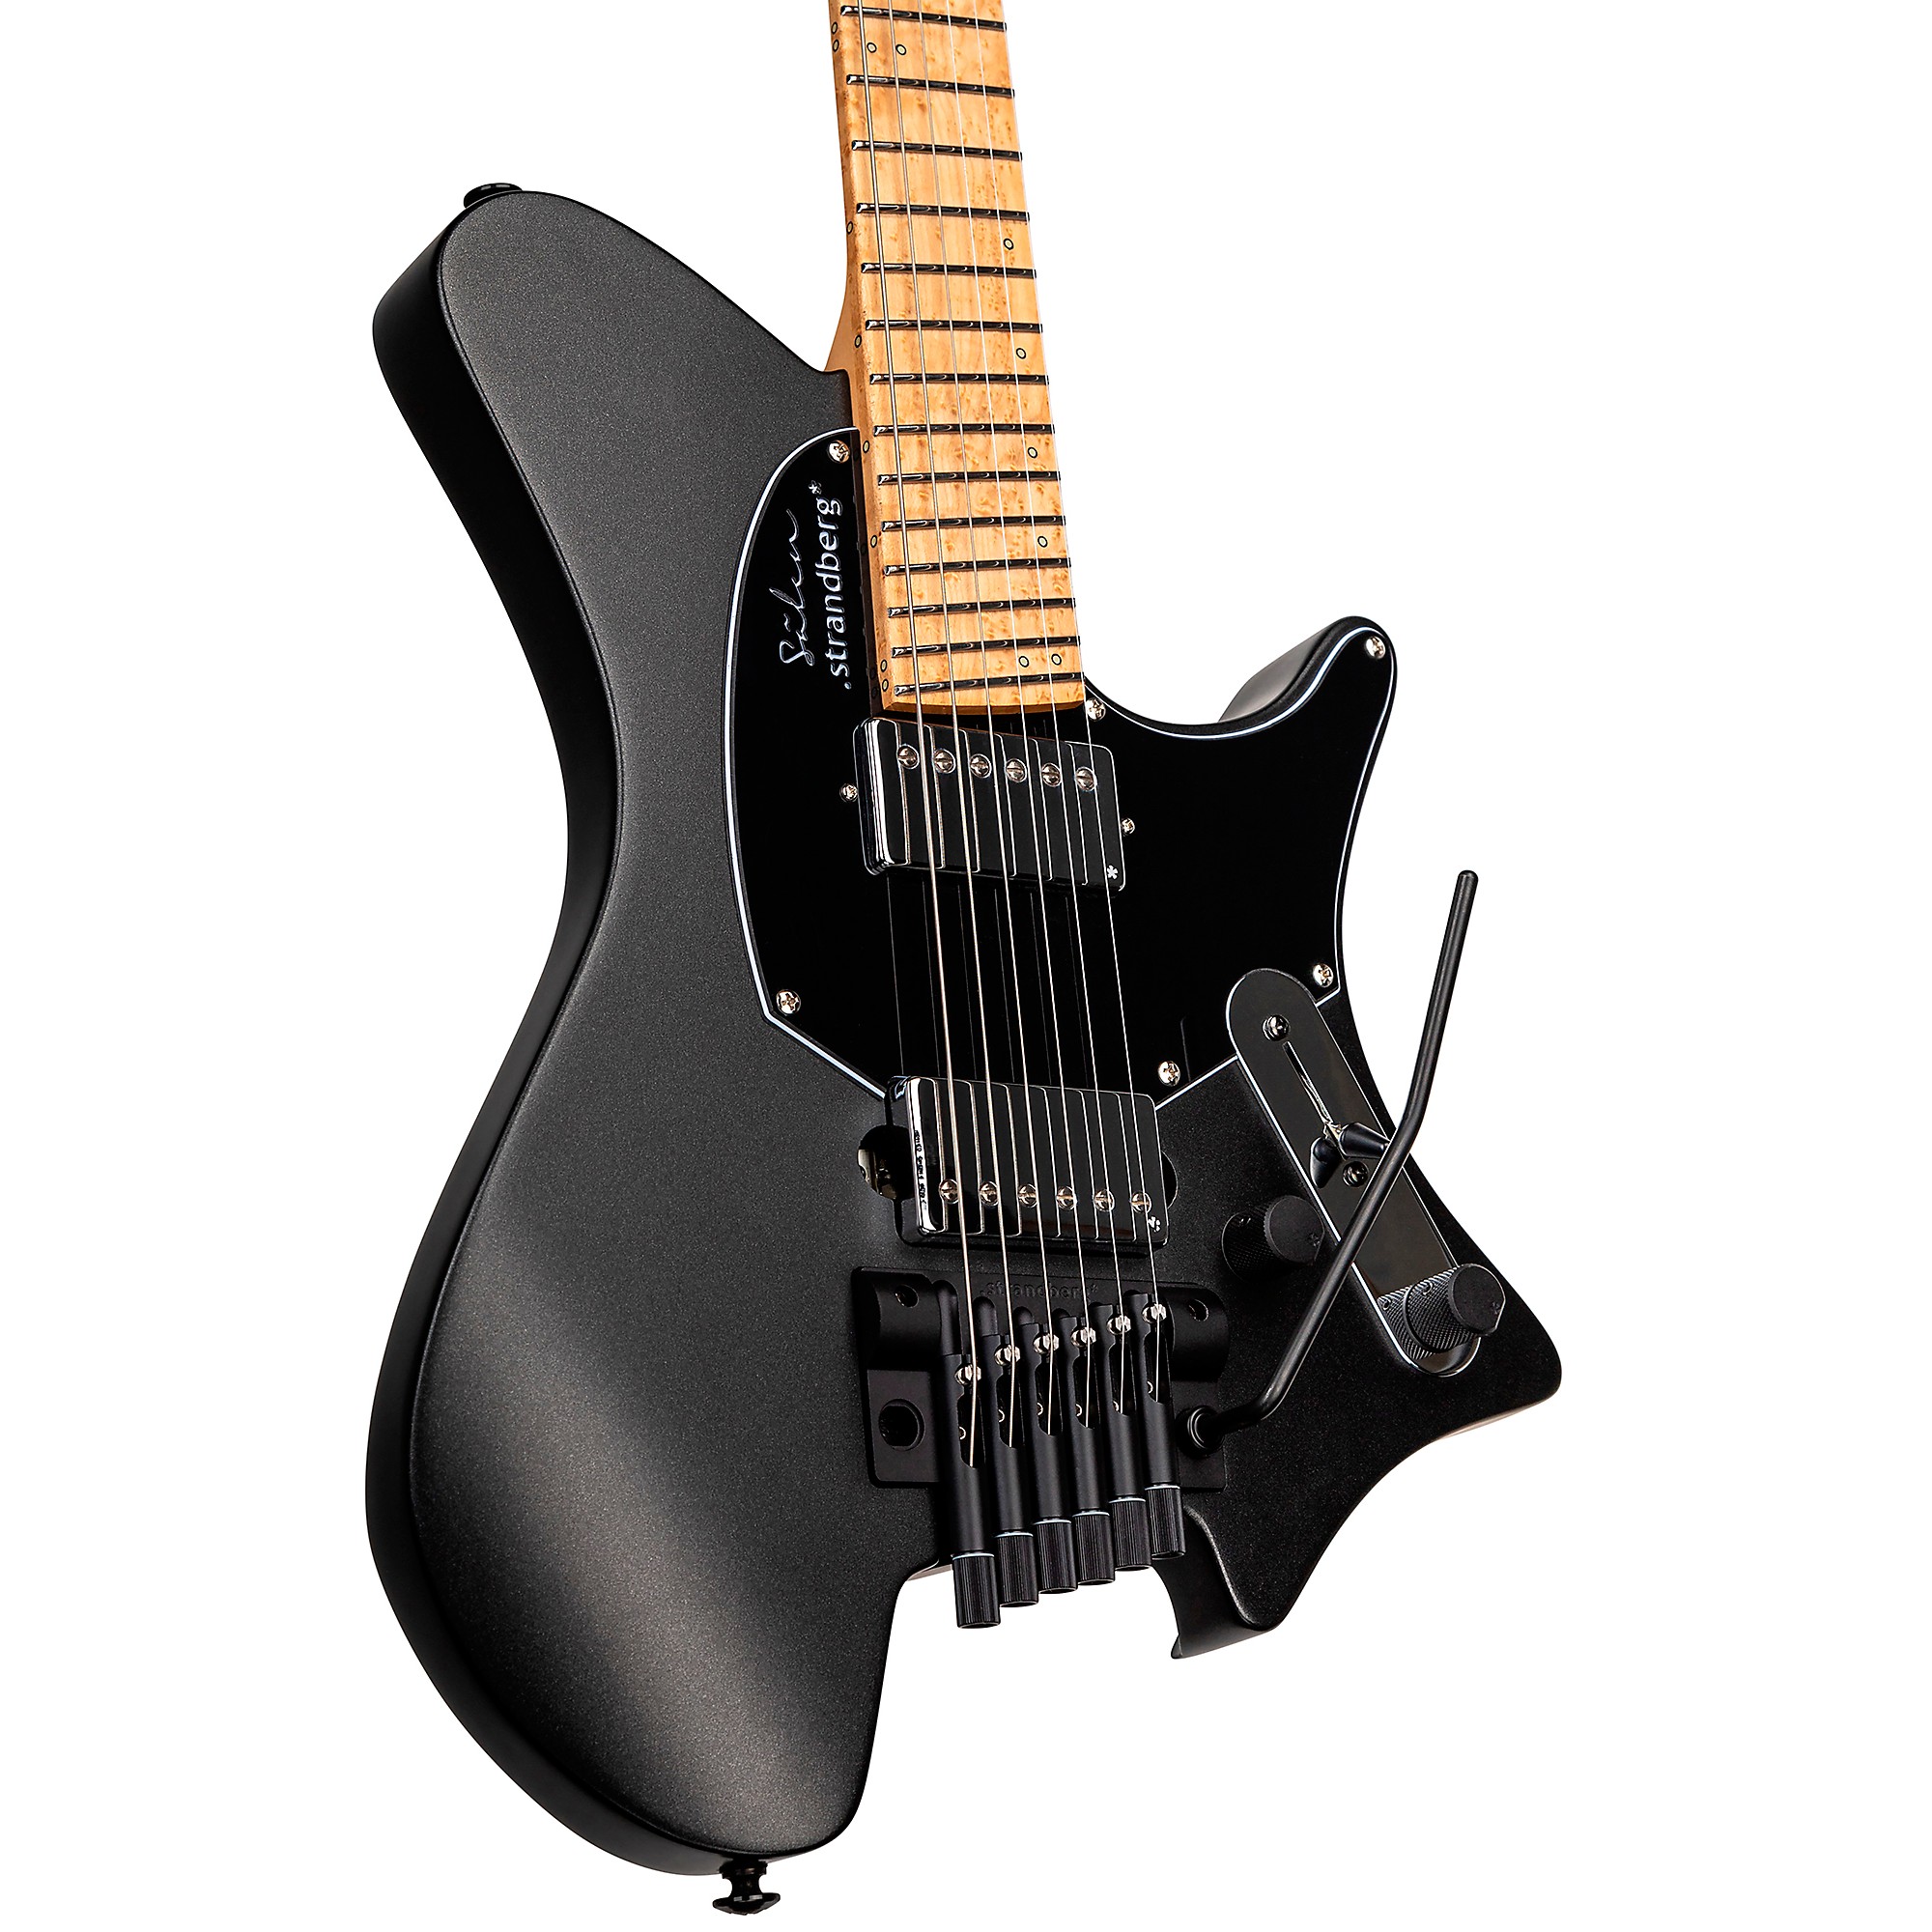 Platinum strandberg Salen Classic NX 6 Tremolo Electric Guitar 